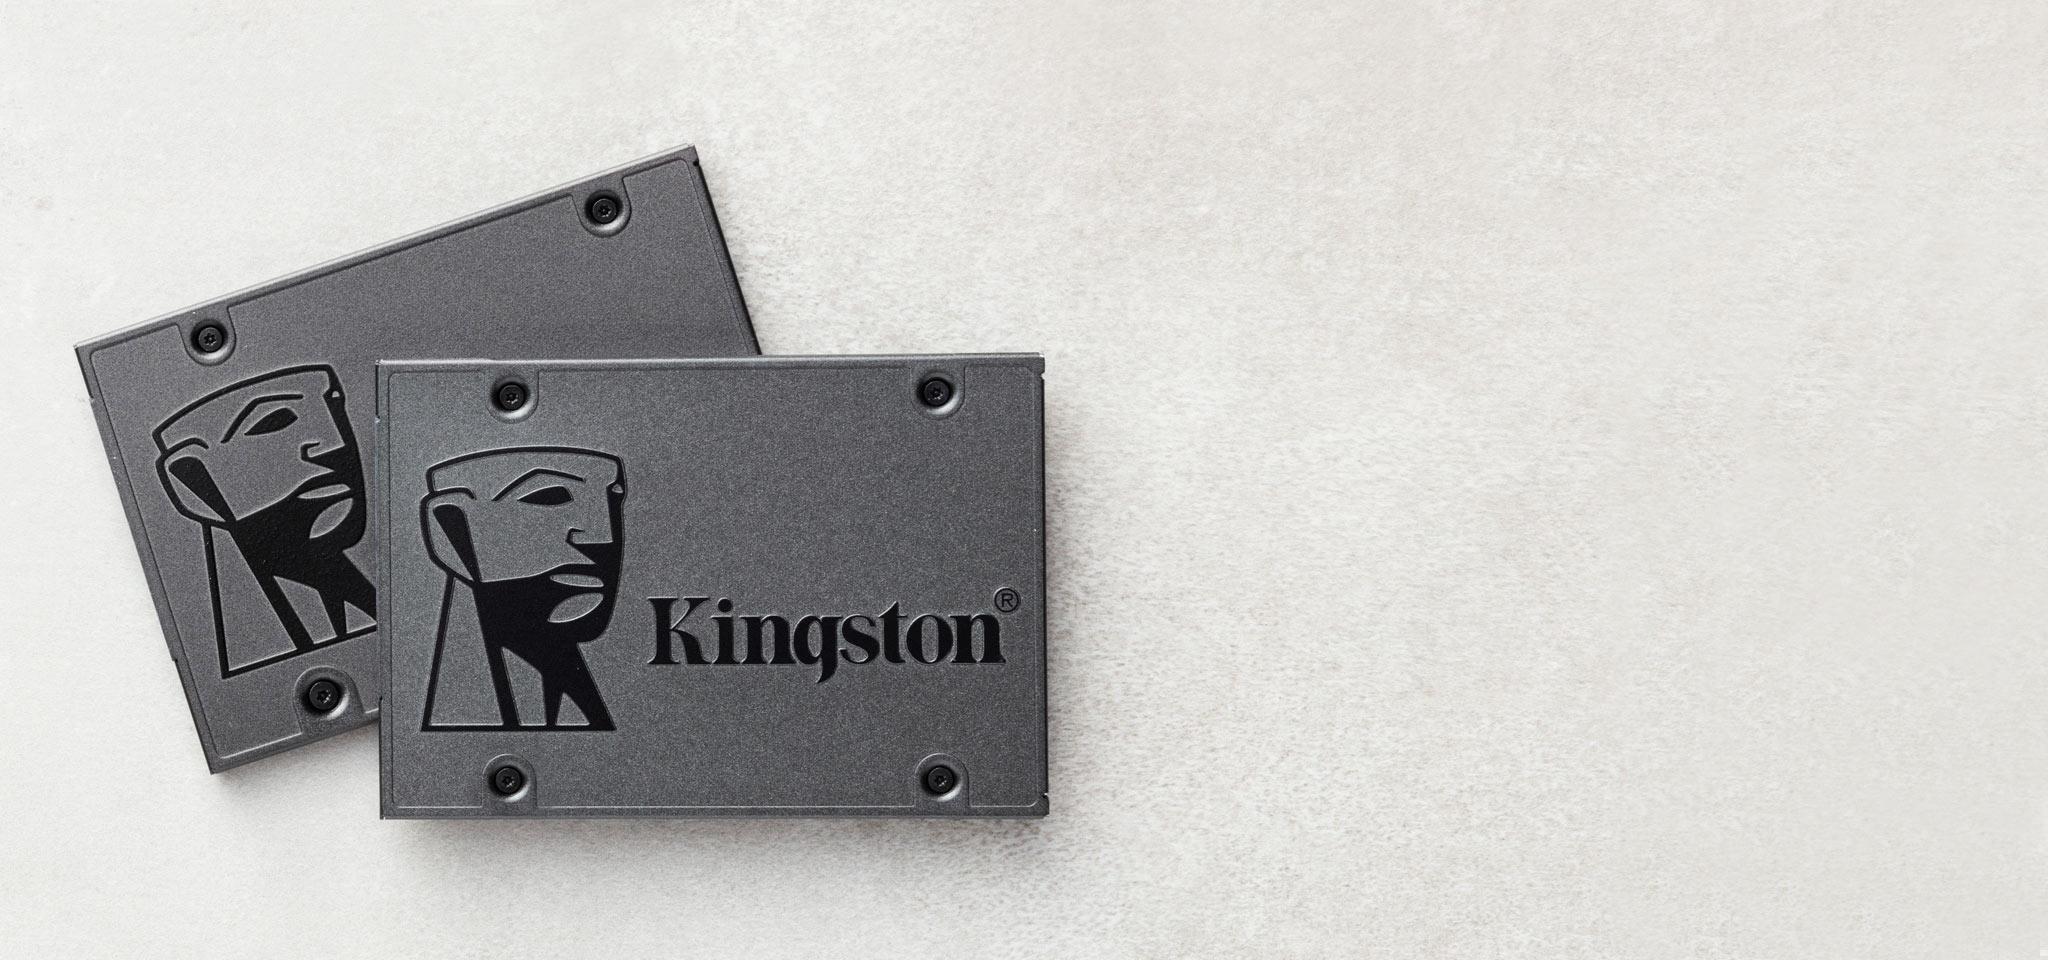 Kingston Kingston Q500 Sq500s37/240g 240 Go SATA III 2.5 IN SSD 